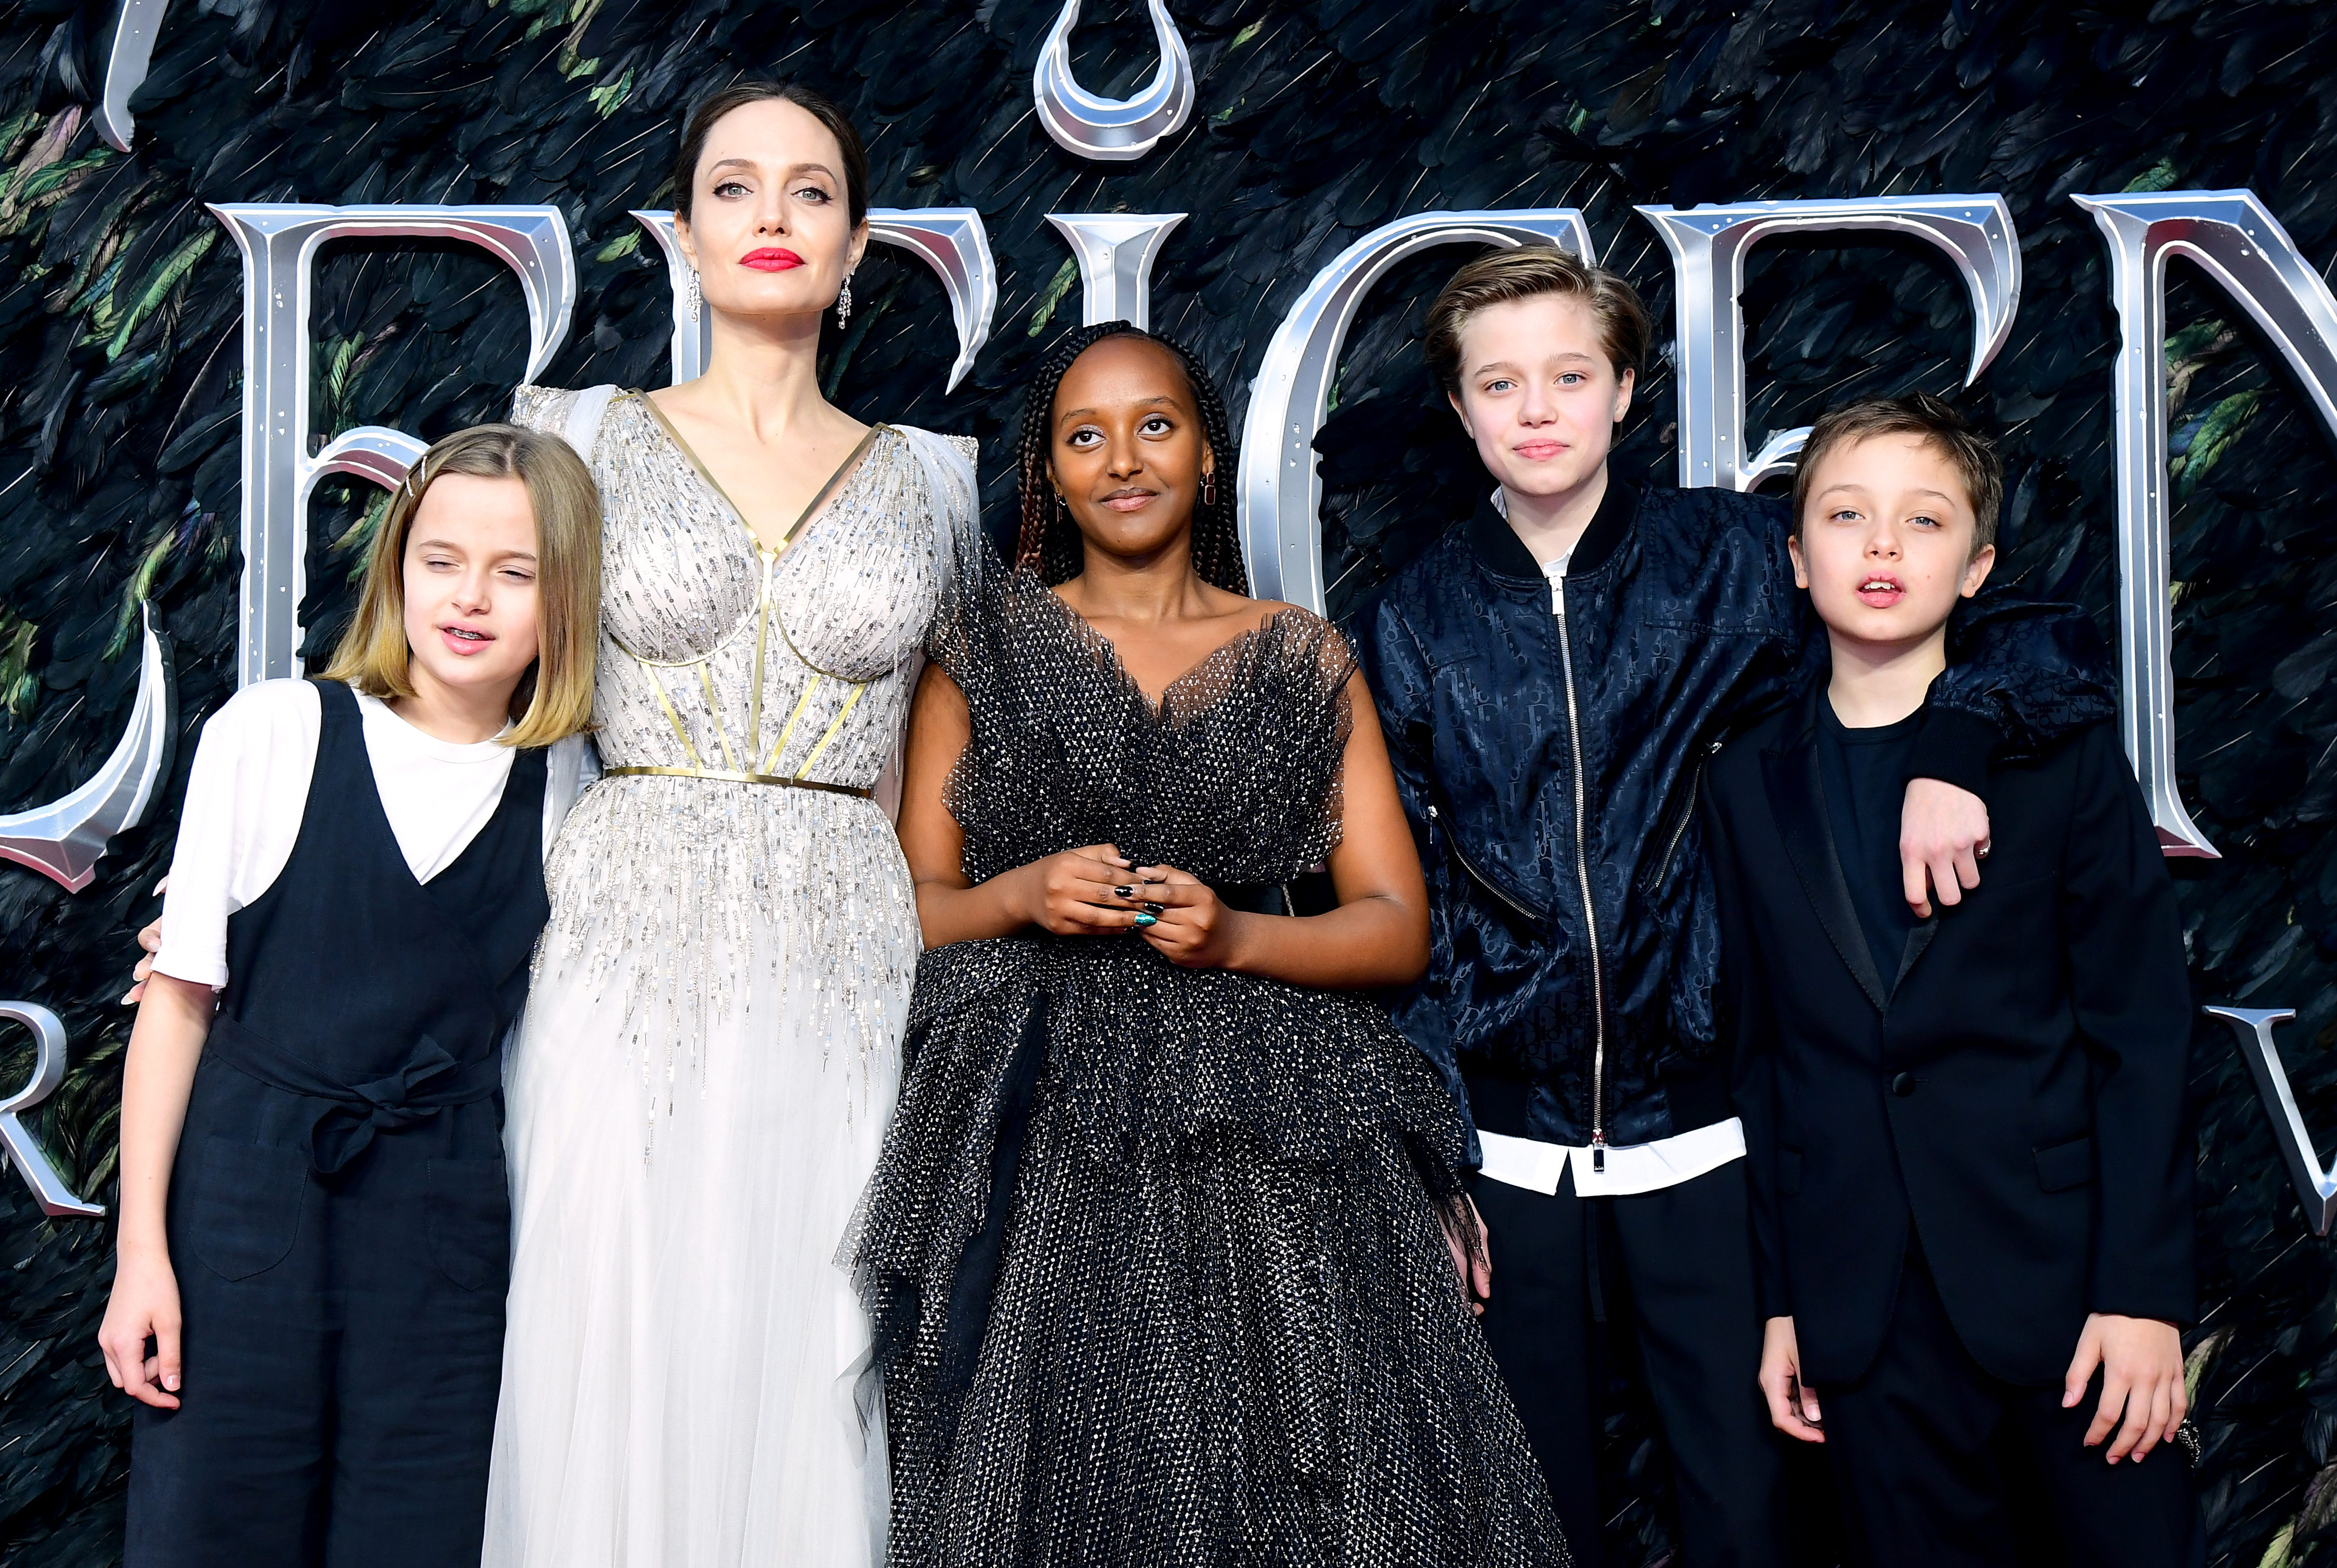 Vivienne Jolie-Pitt, Zahara Jolie-Pitt, Shiloh Jolie-Pitt, and Knox Jolie-Pitt attending the Maleficent: Mistress of Evil European Premiere held at Imax Waterloo in London on Wednesday October 9, 2019